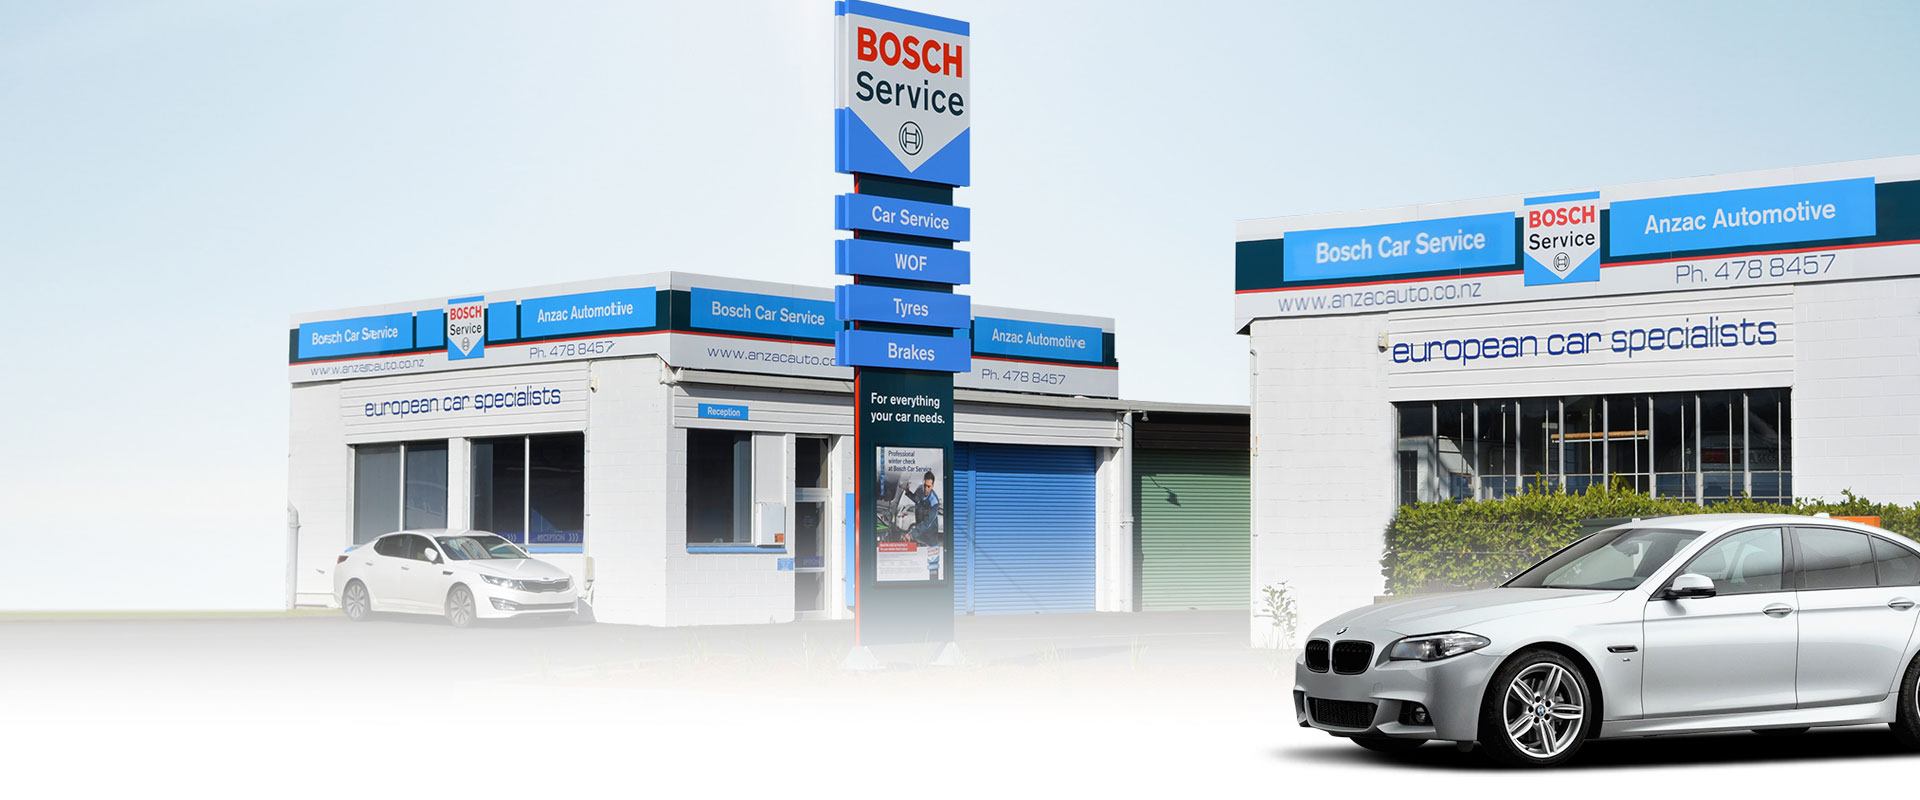 Anzac Automotive Bosch Car Service